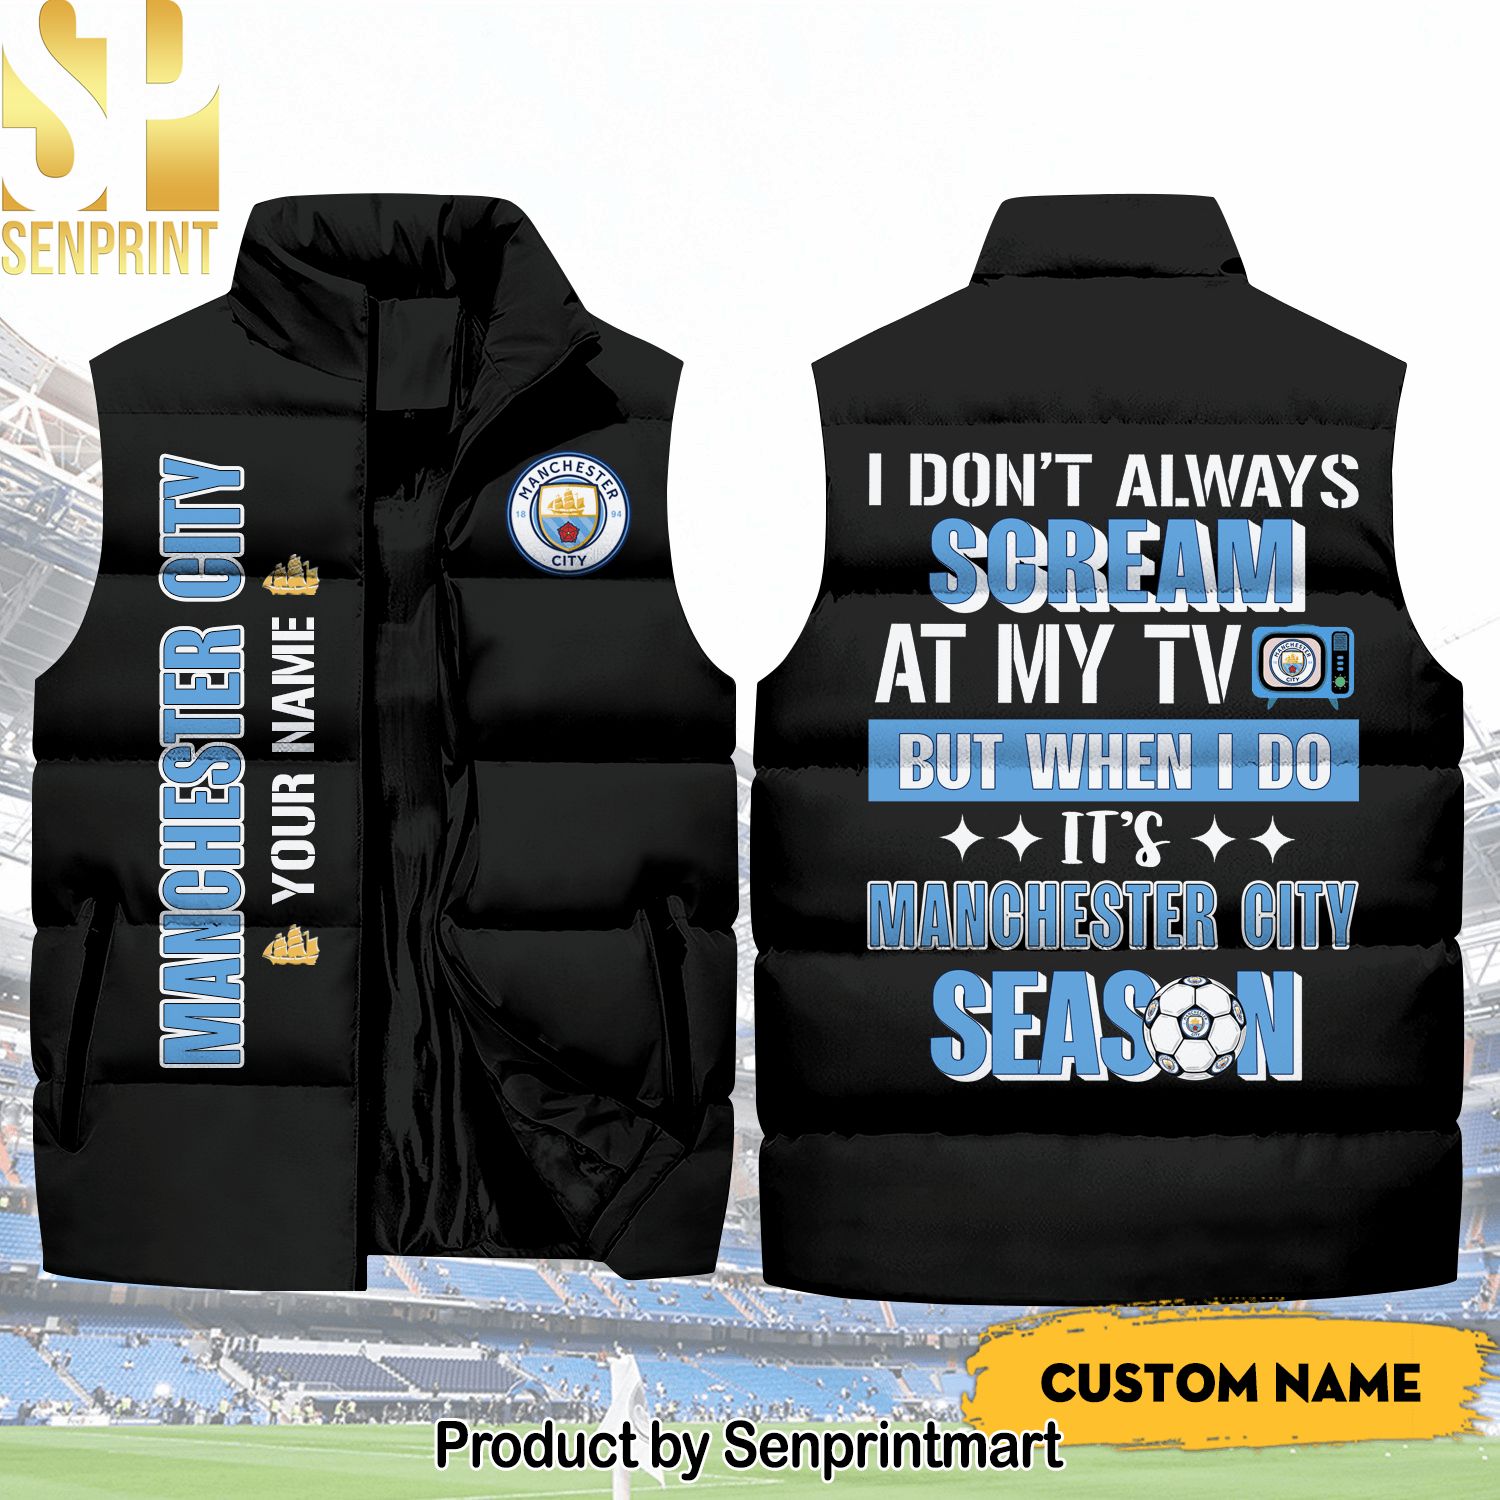 English Premier League Manchester City Season Cool Version Sleeveless Jacket